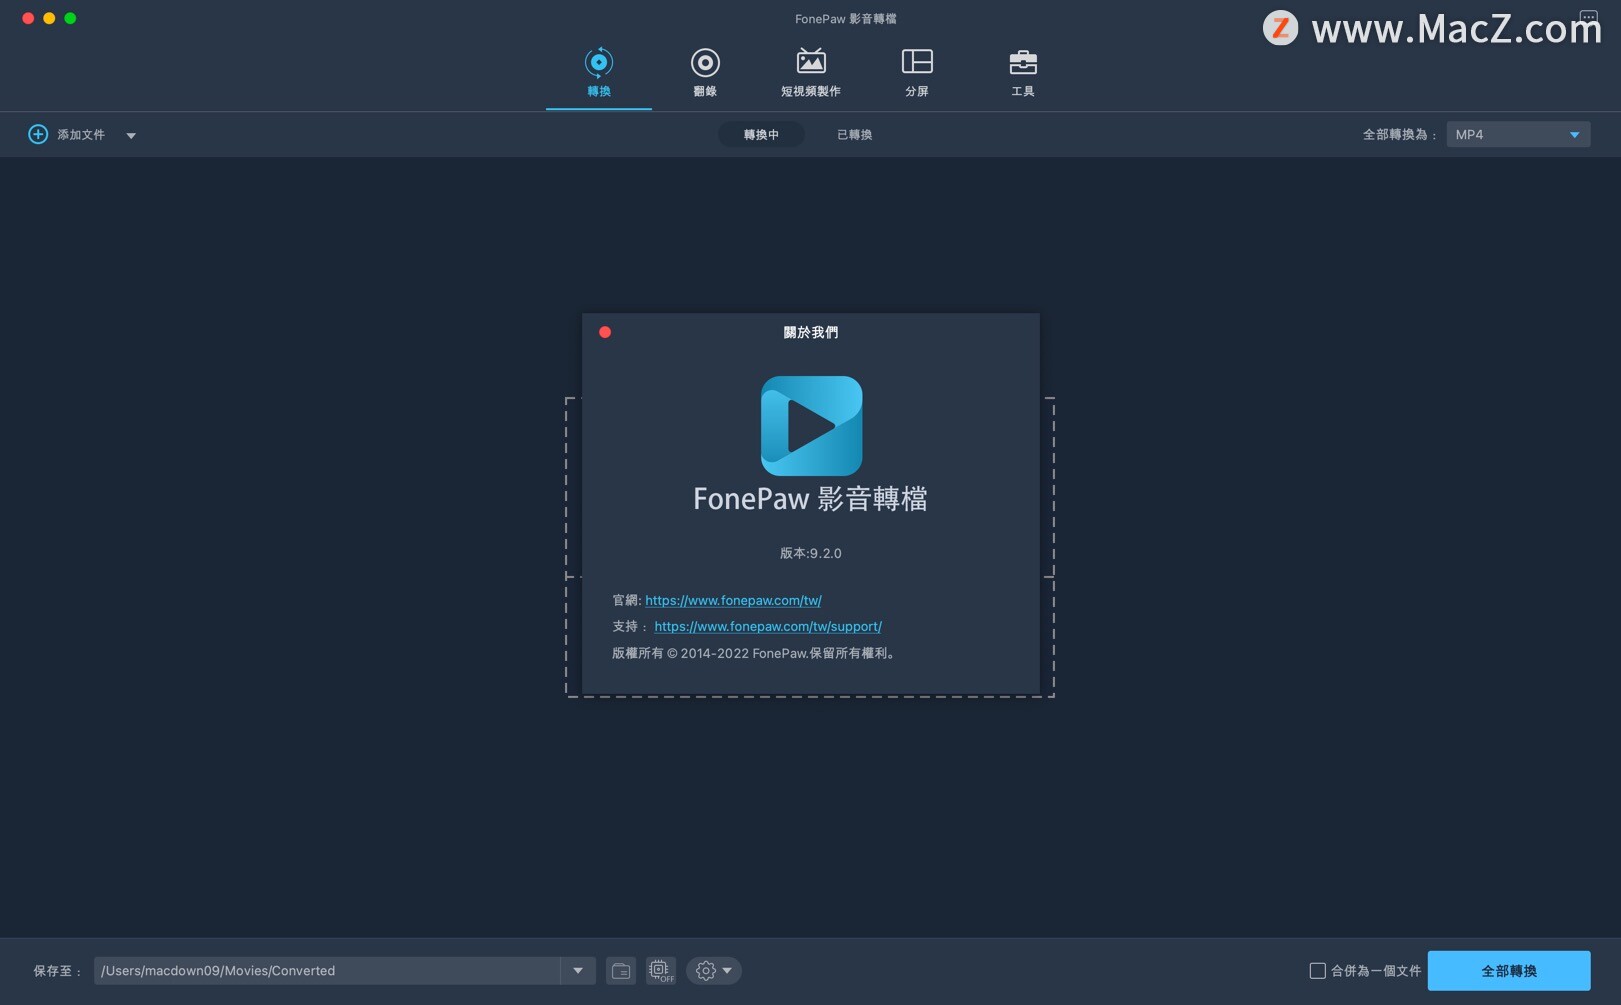 FonePaw Video Converter Ultimate 8.2.0 for mac download